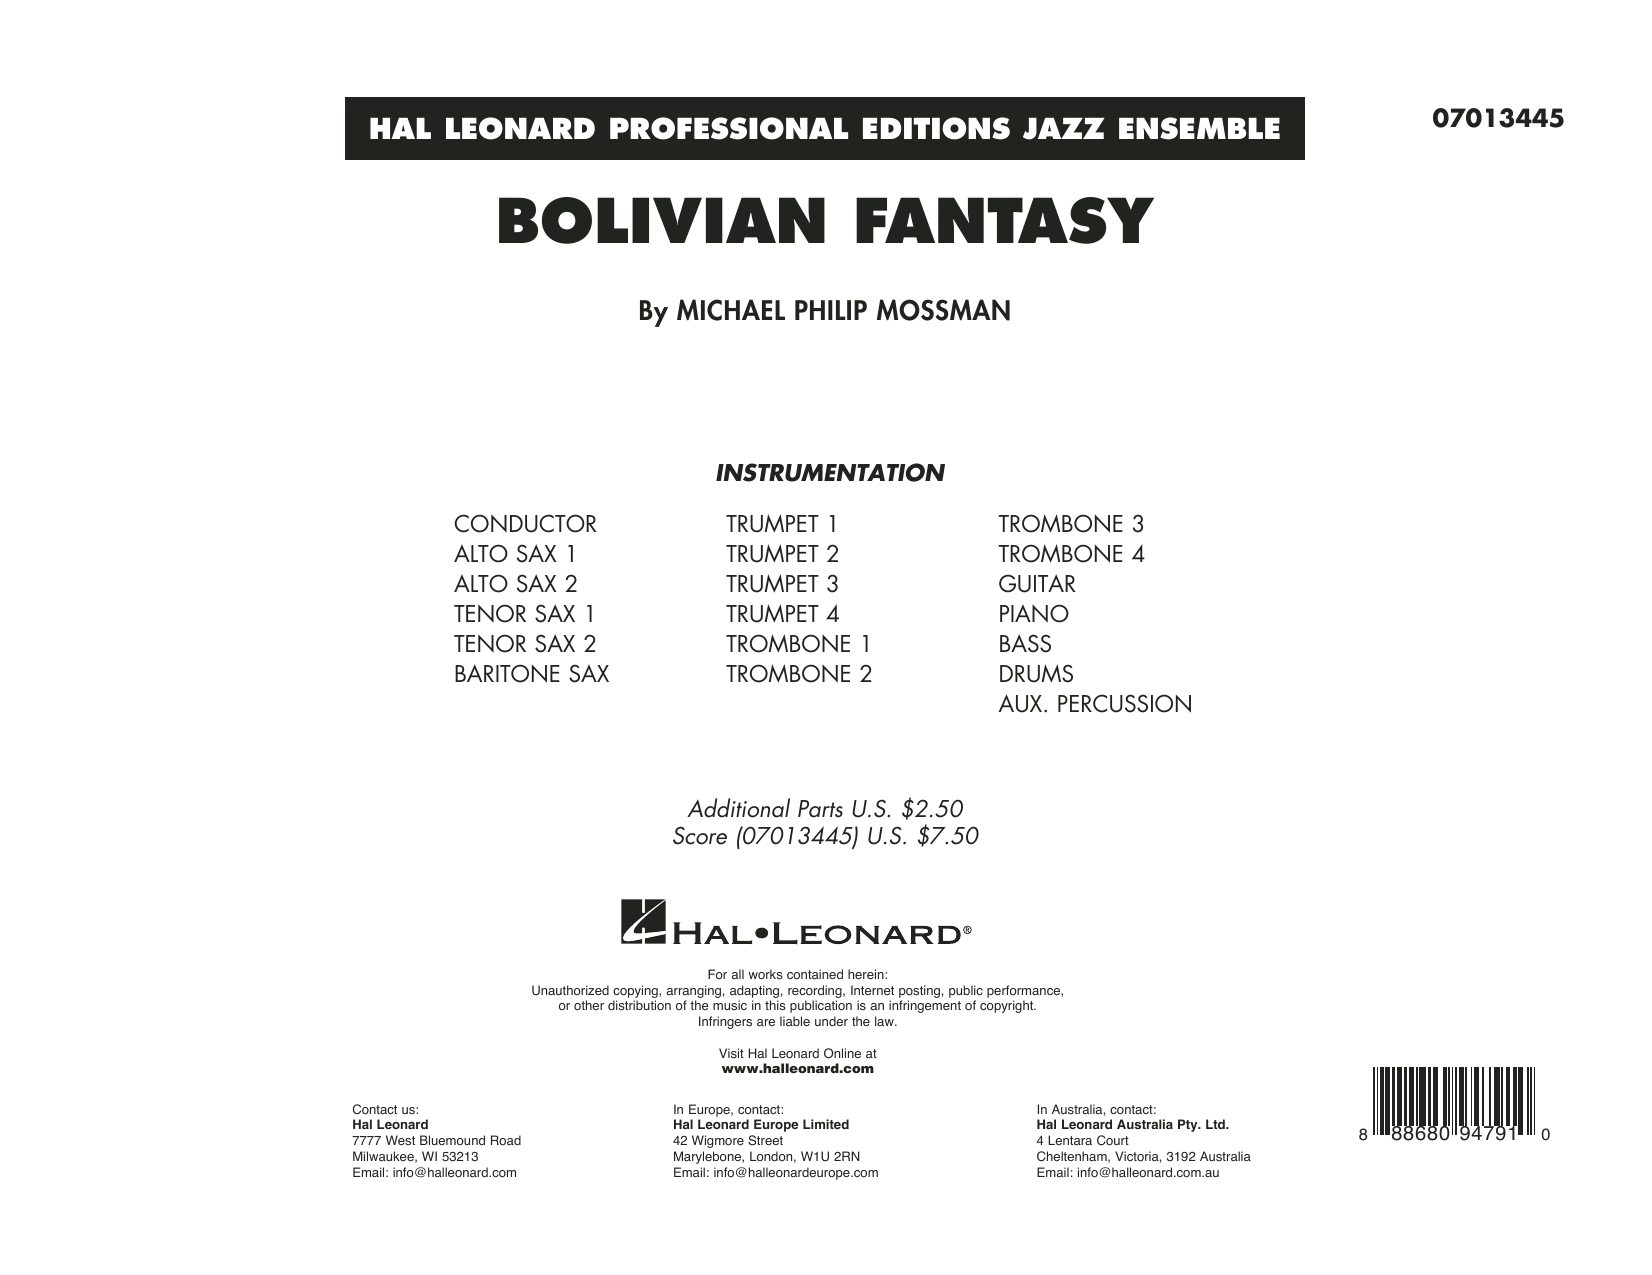 Michael Philip Mossman Bolivian Fantasy - Conductor Score (Full Score) Sheet Music Notes & Chords for Jazz Ensemble - Download or Print PDF